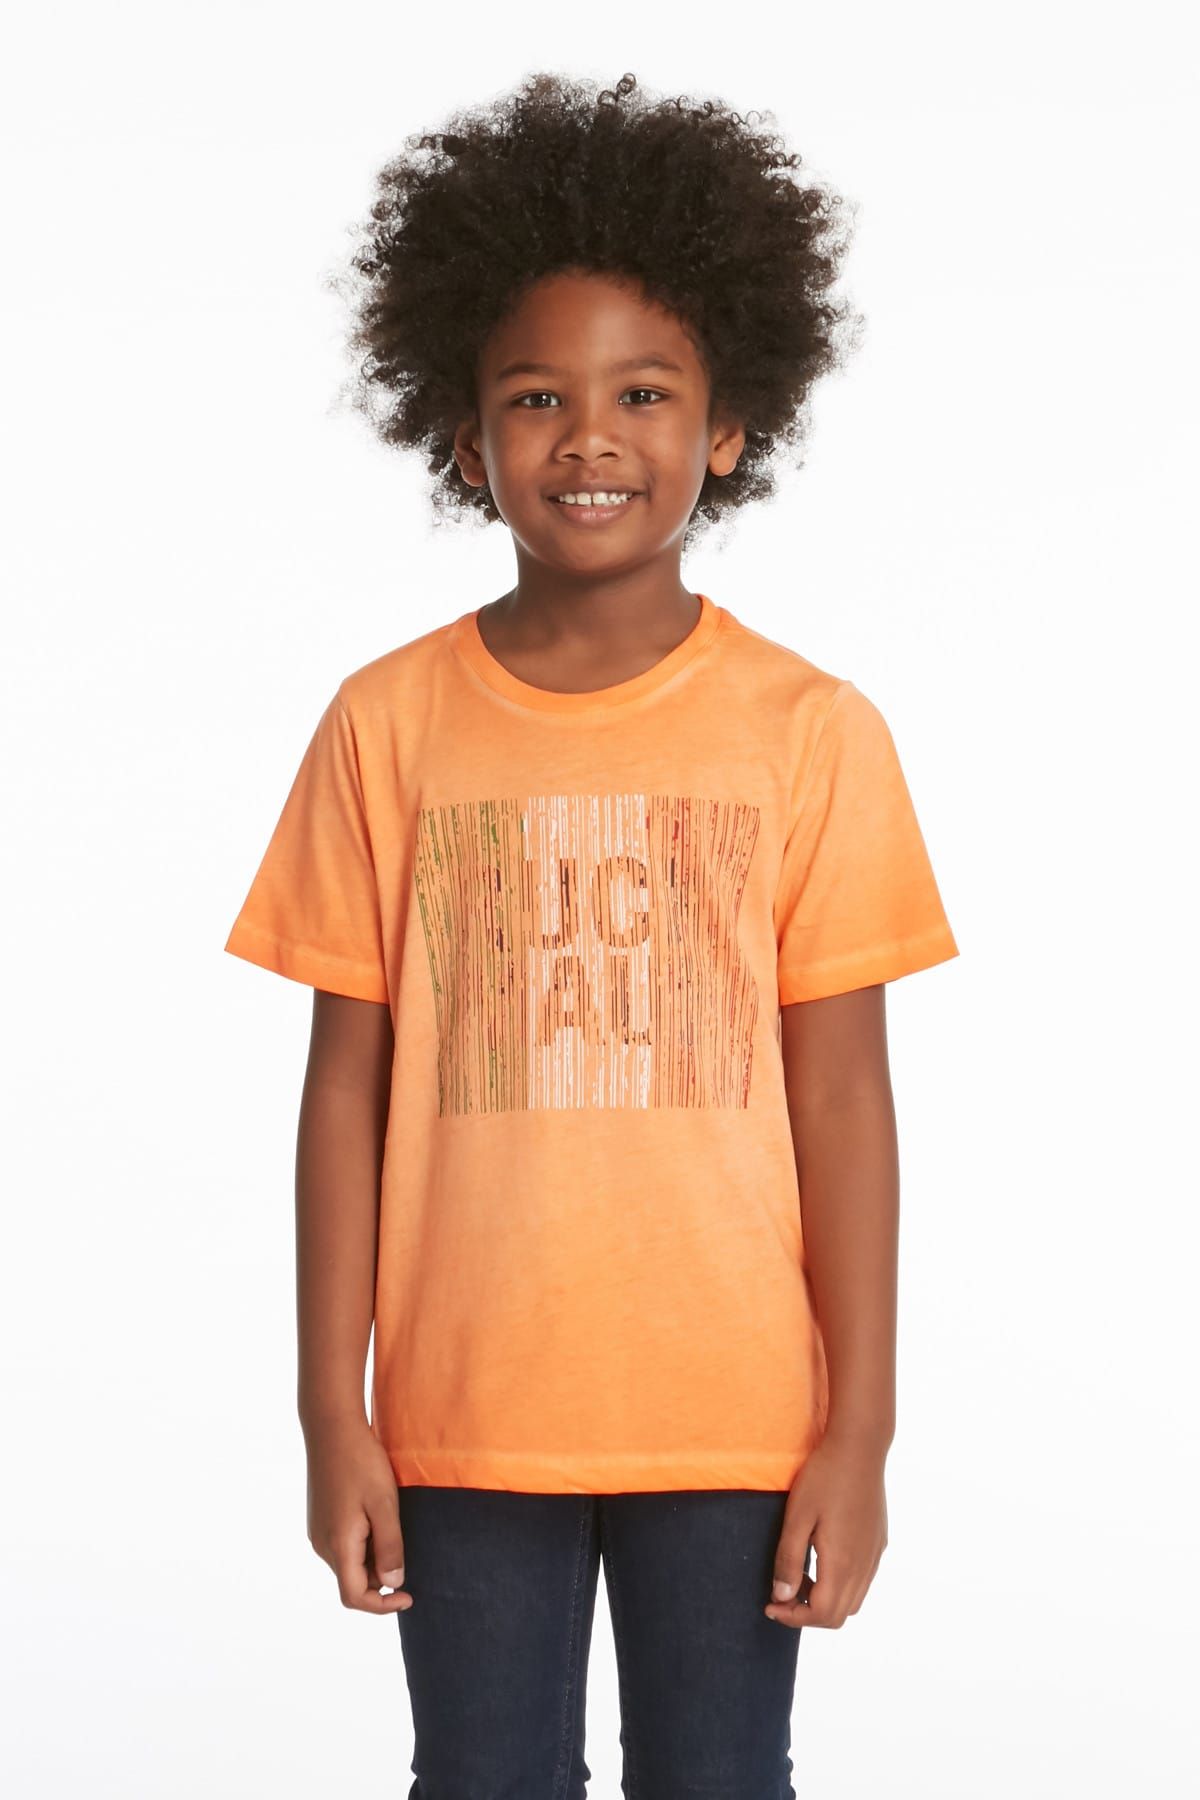 Ruck & Maul Erkek Çocuk Orange T-Shirt ADCJ0302547